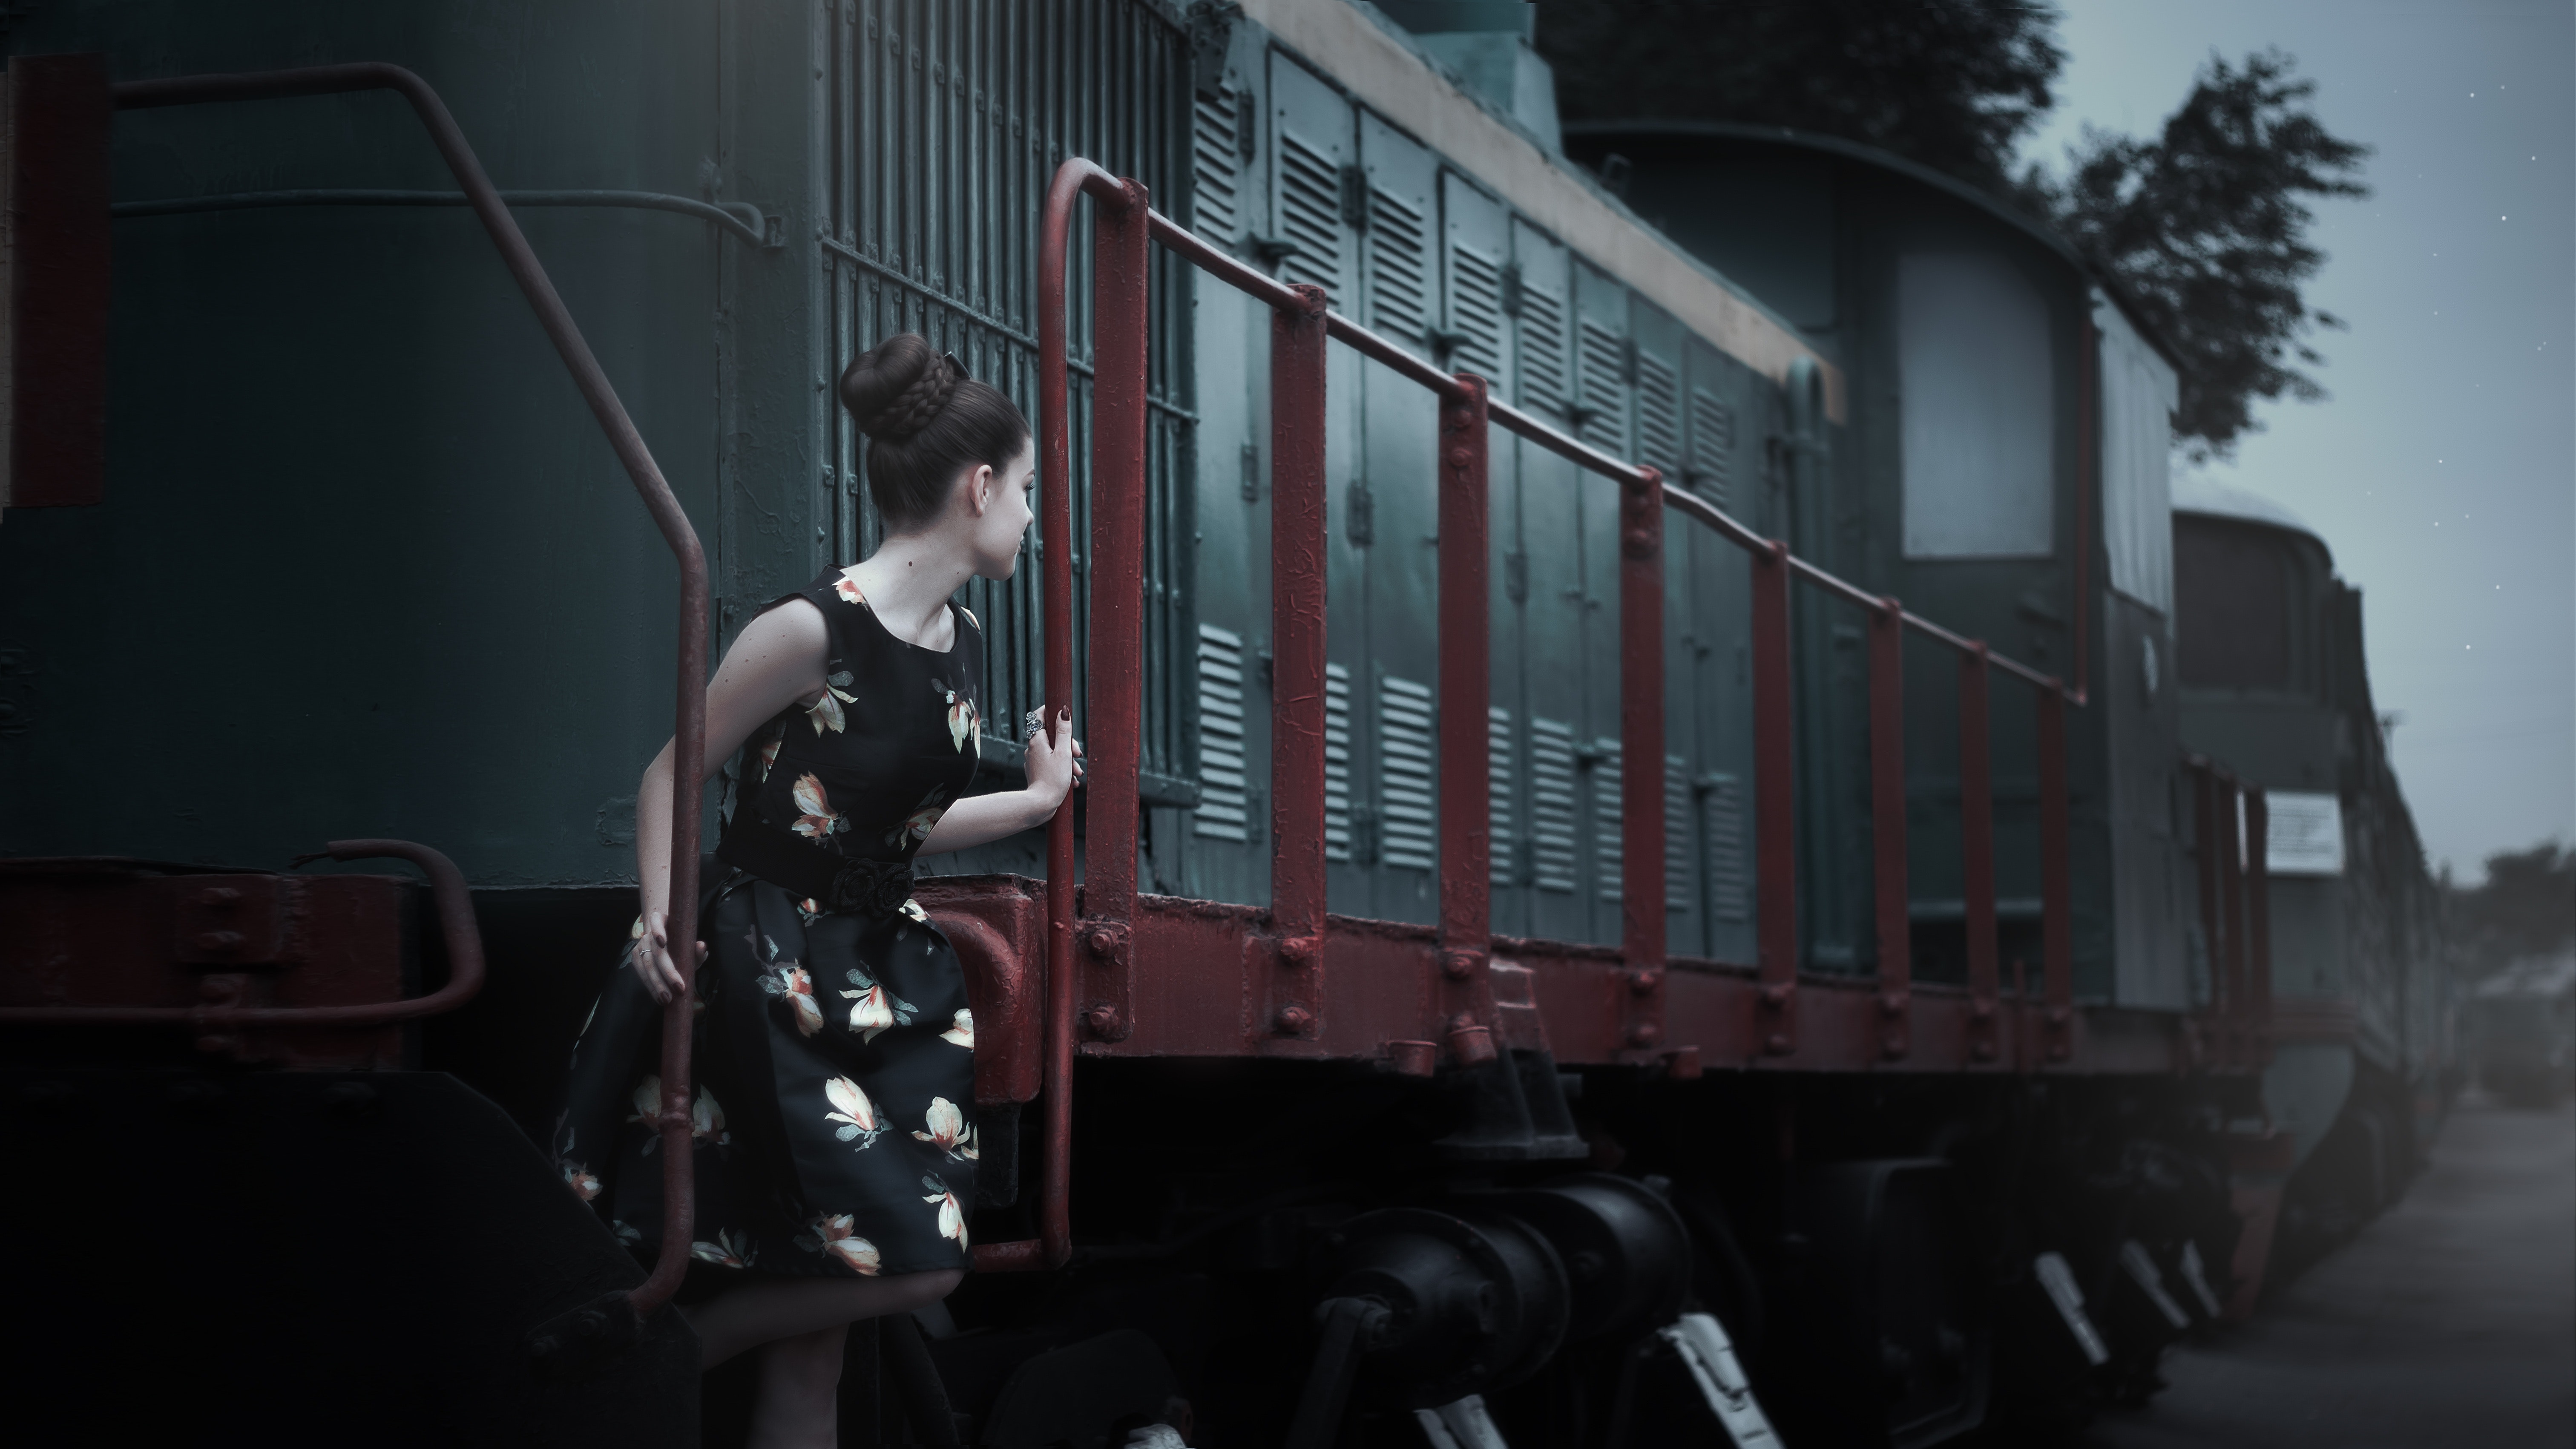 Woman in train photo